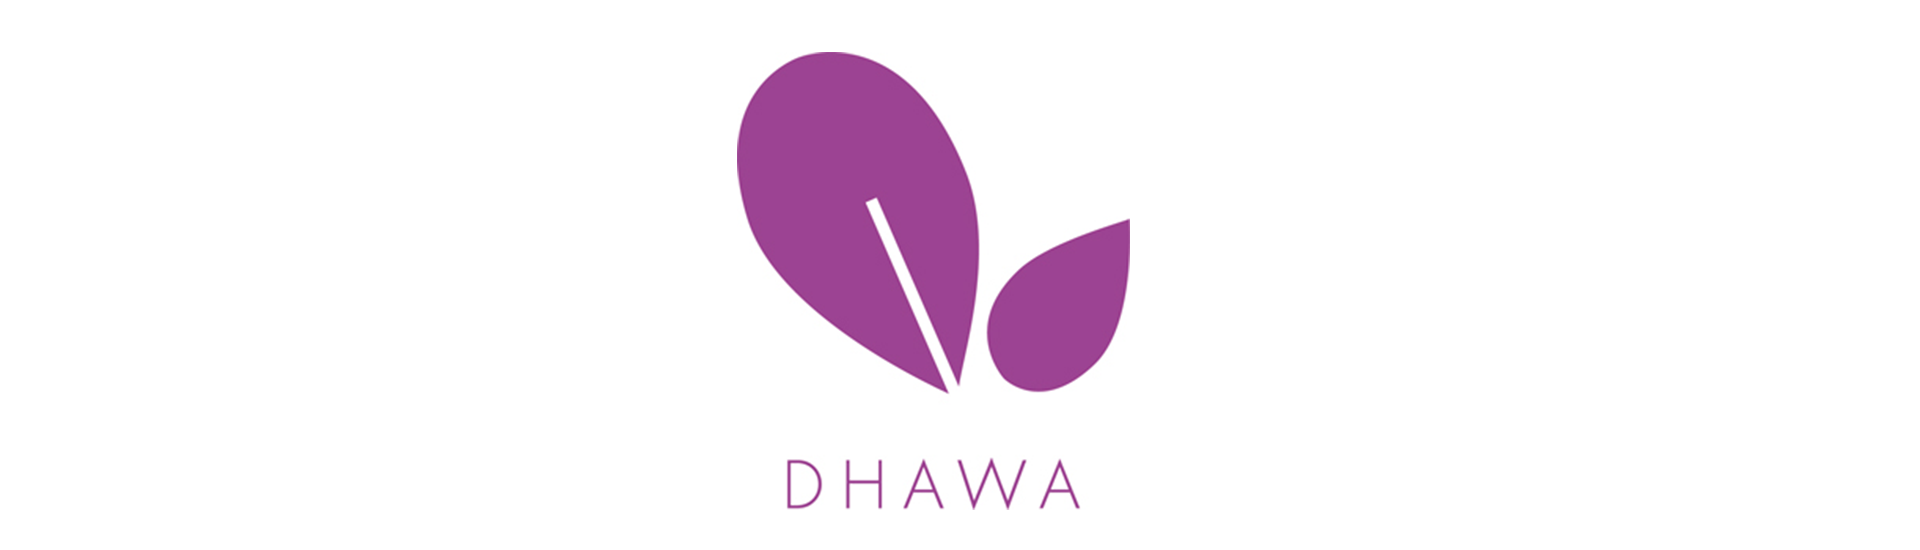 Logotipo Hoteles Dhawa Cuba